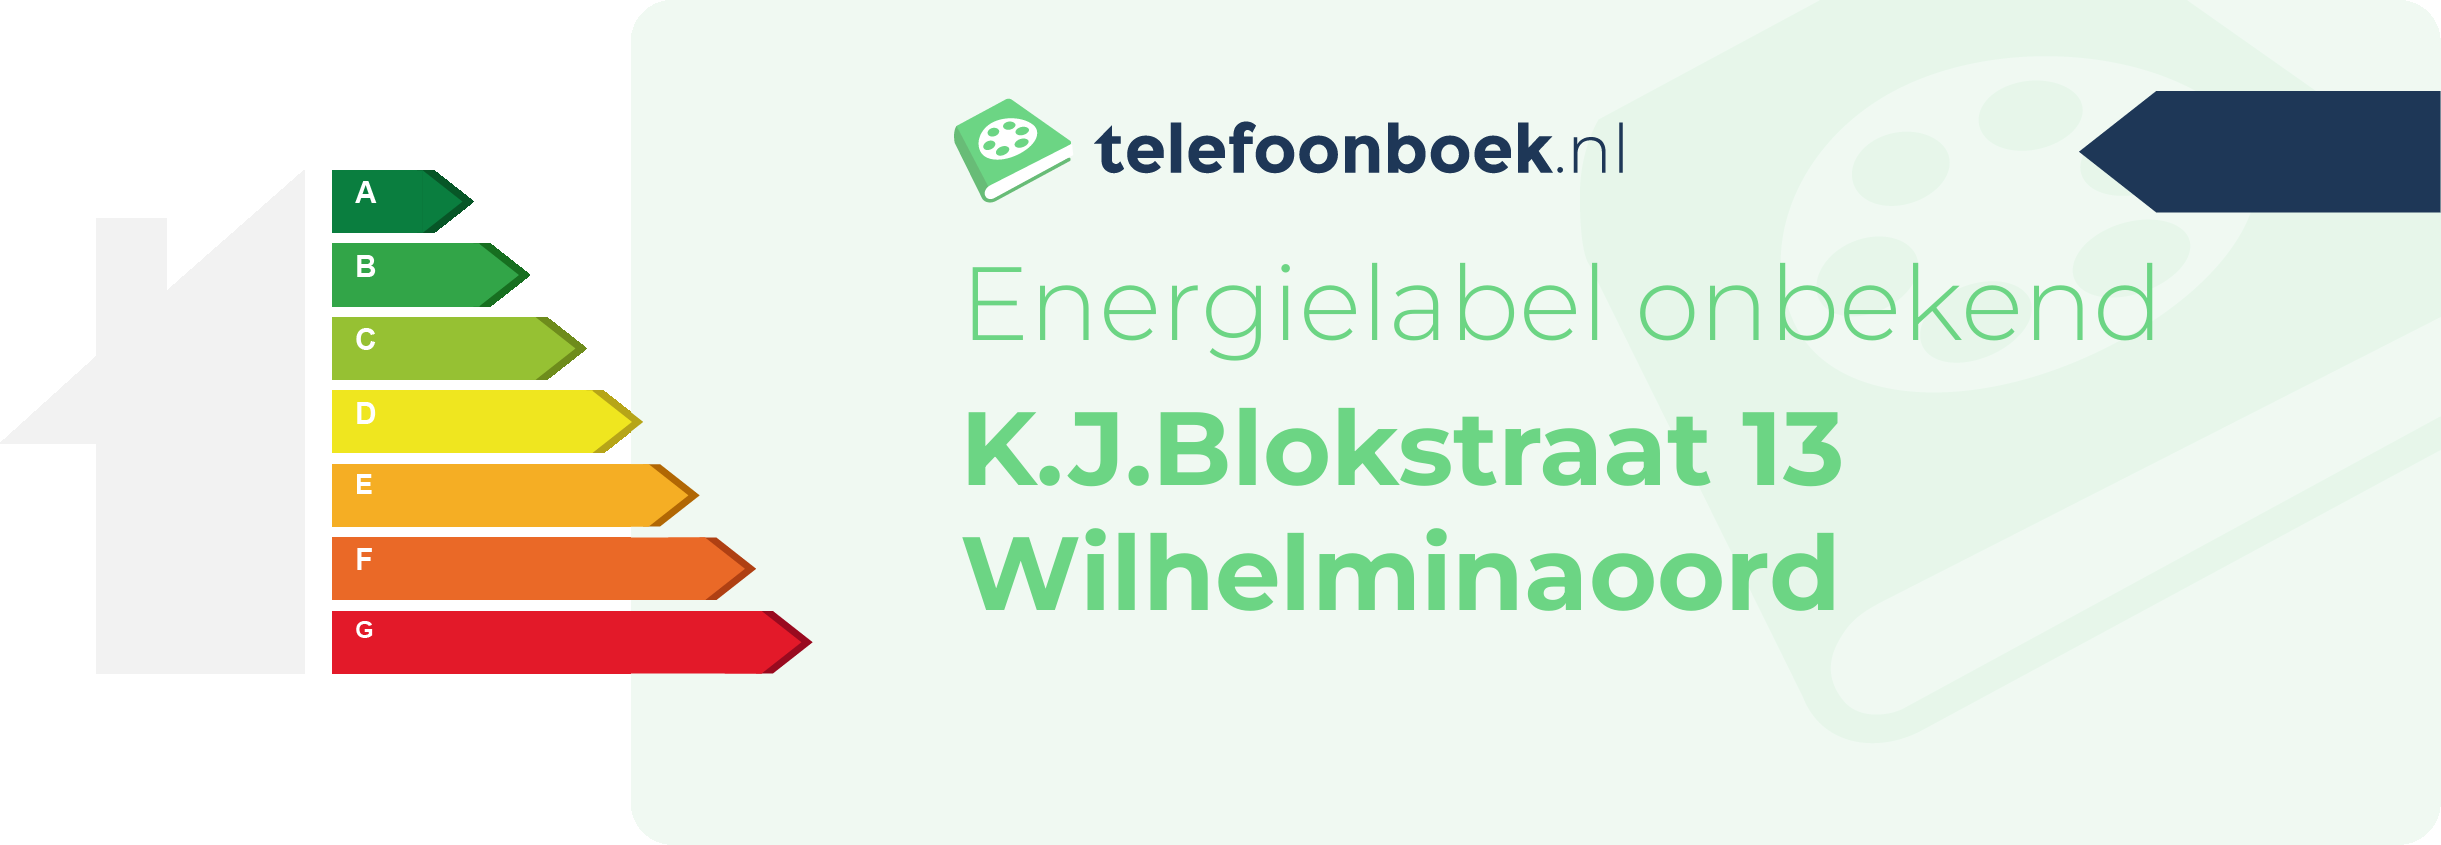 Energielabel K.J.Blokstraat 13 Wilhelminaoord